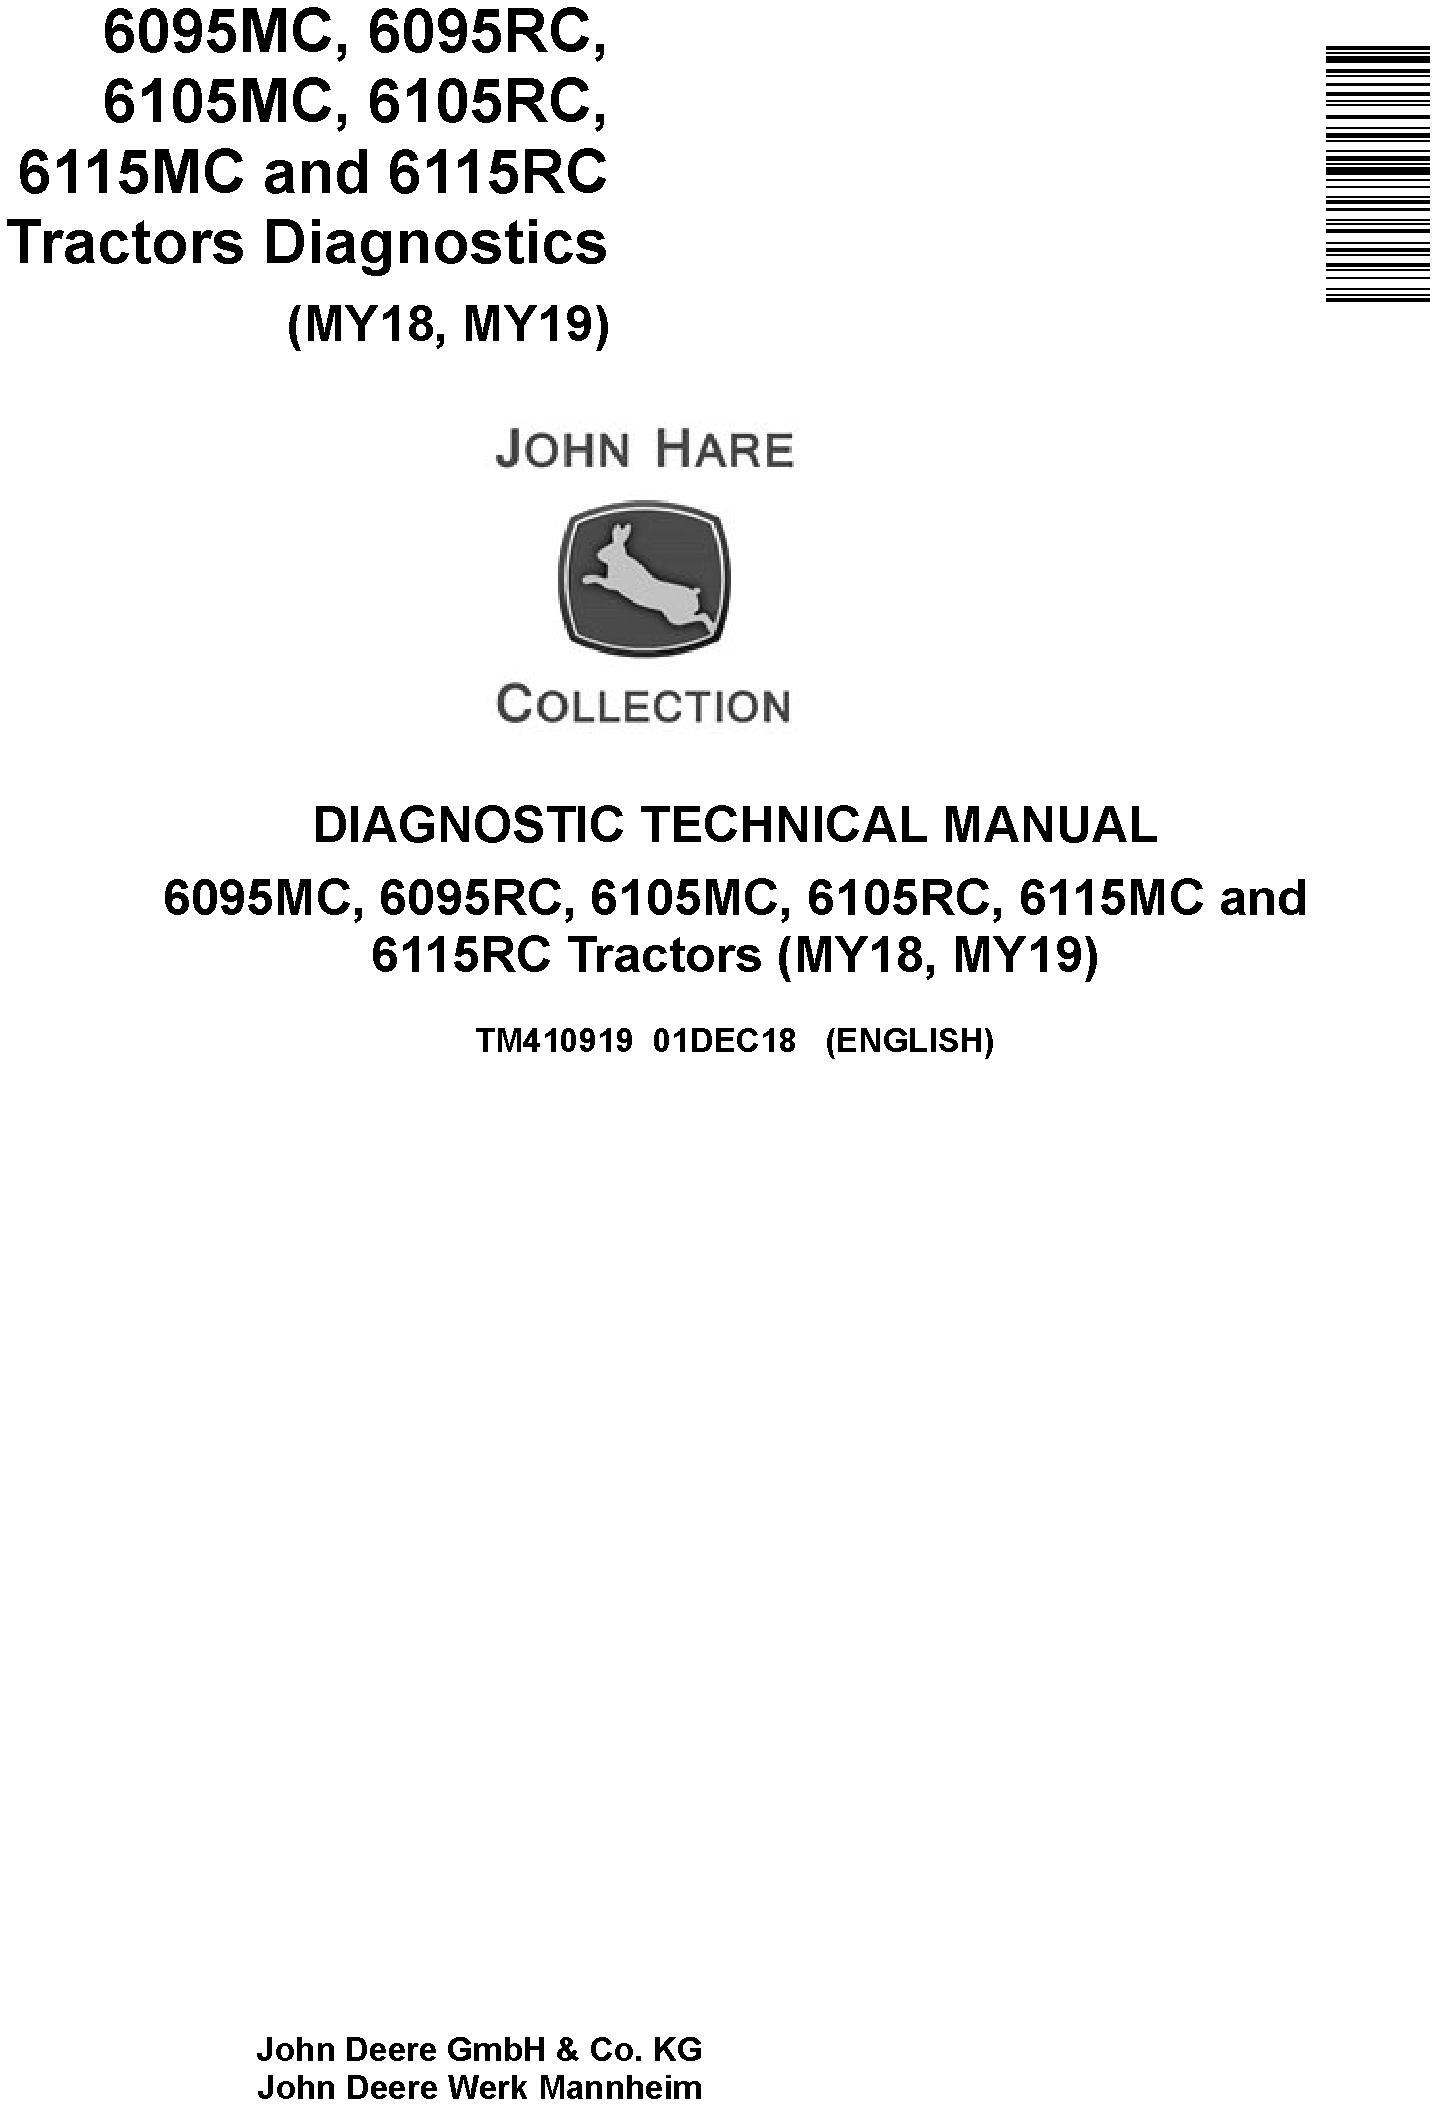 John Deere 6095MC to 6115RC Tractor Diagnostic Technical Manual TM410919